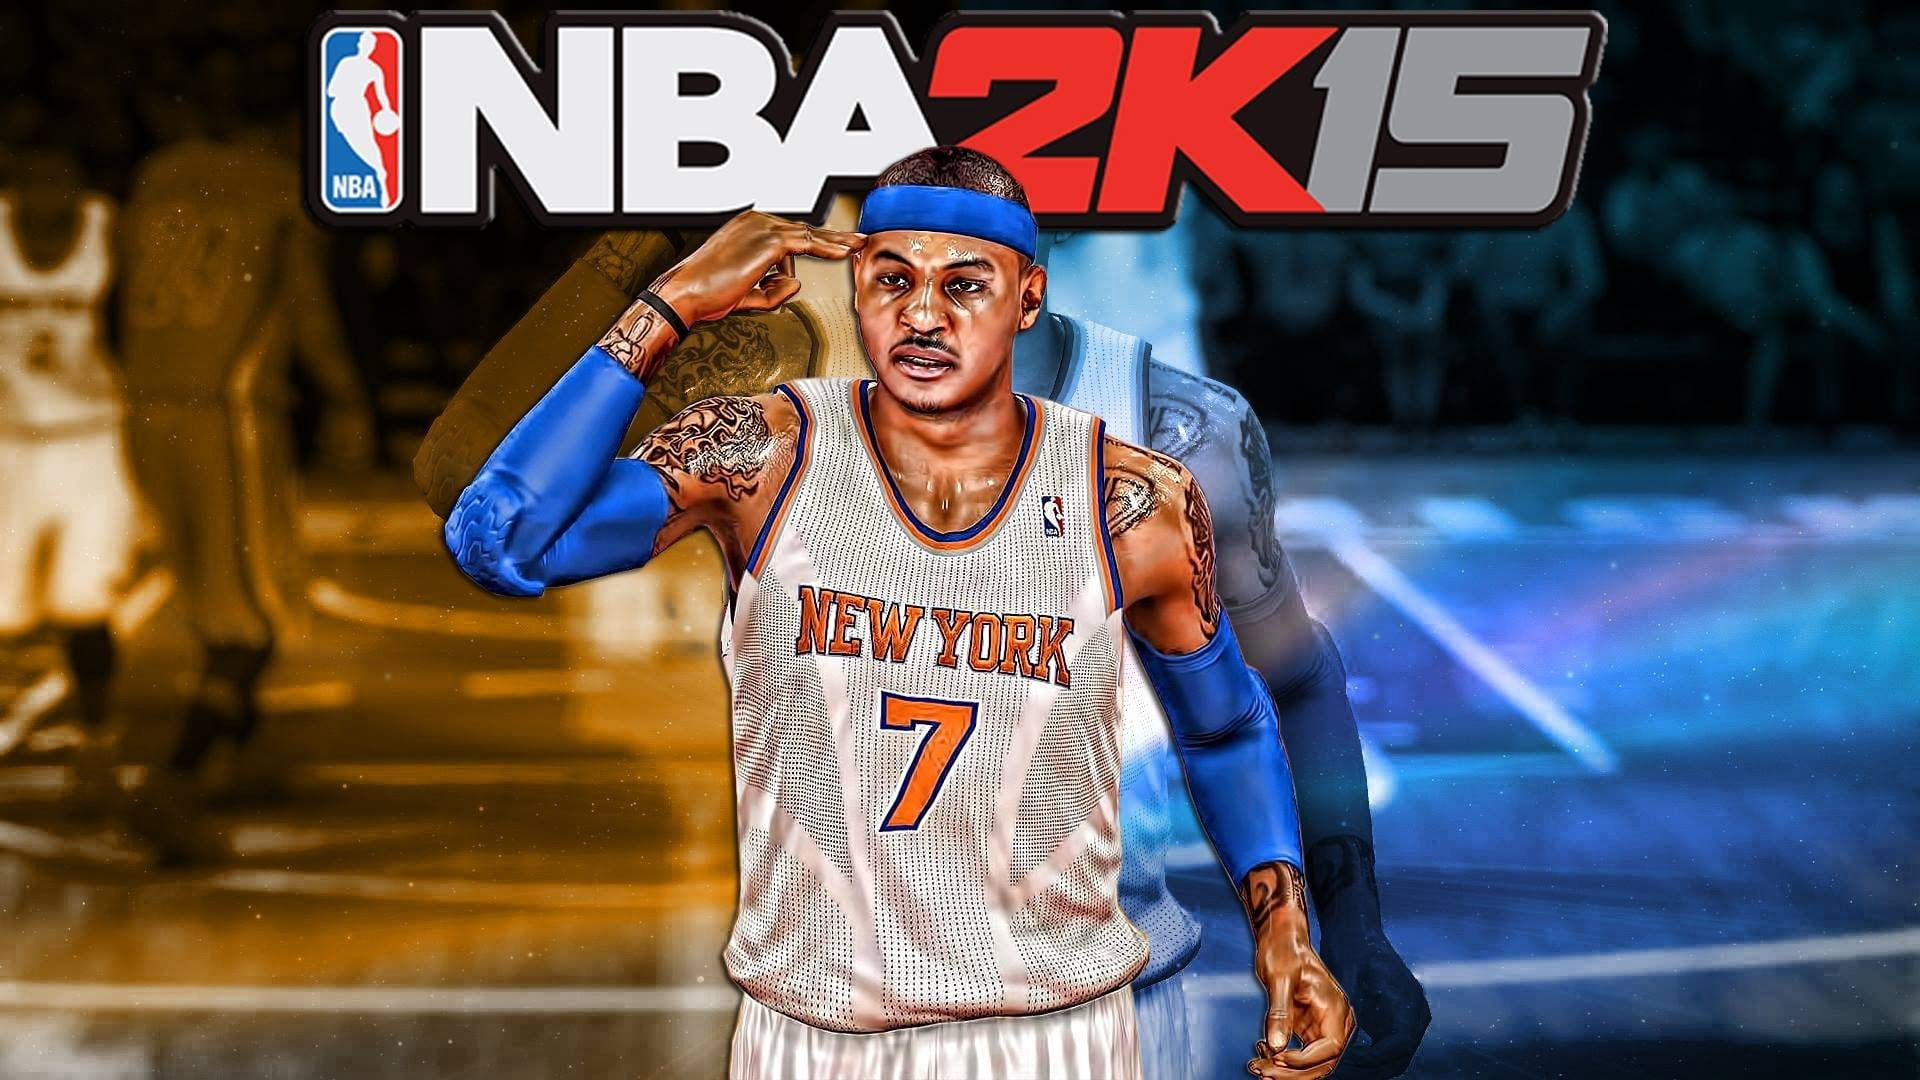 NBA 2K15 Carmelo Anthony digital wallpaper, visual concepts, 2014